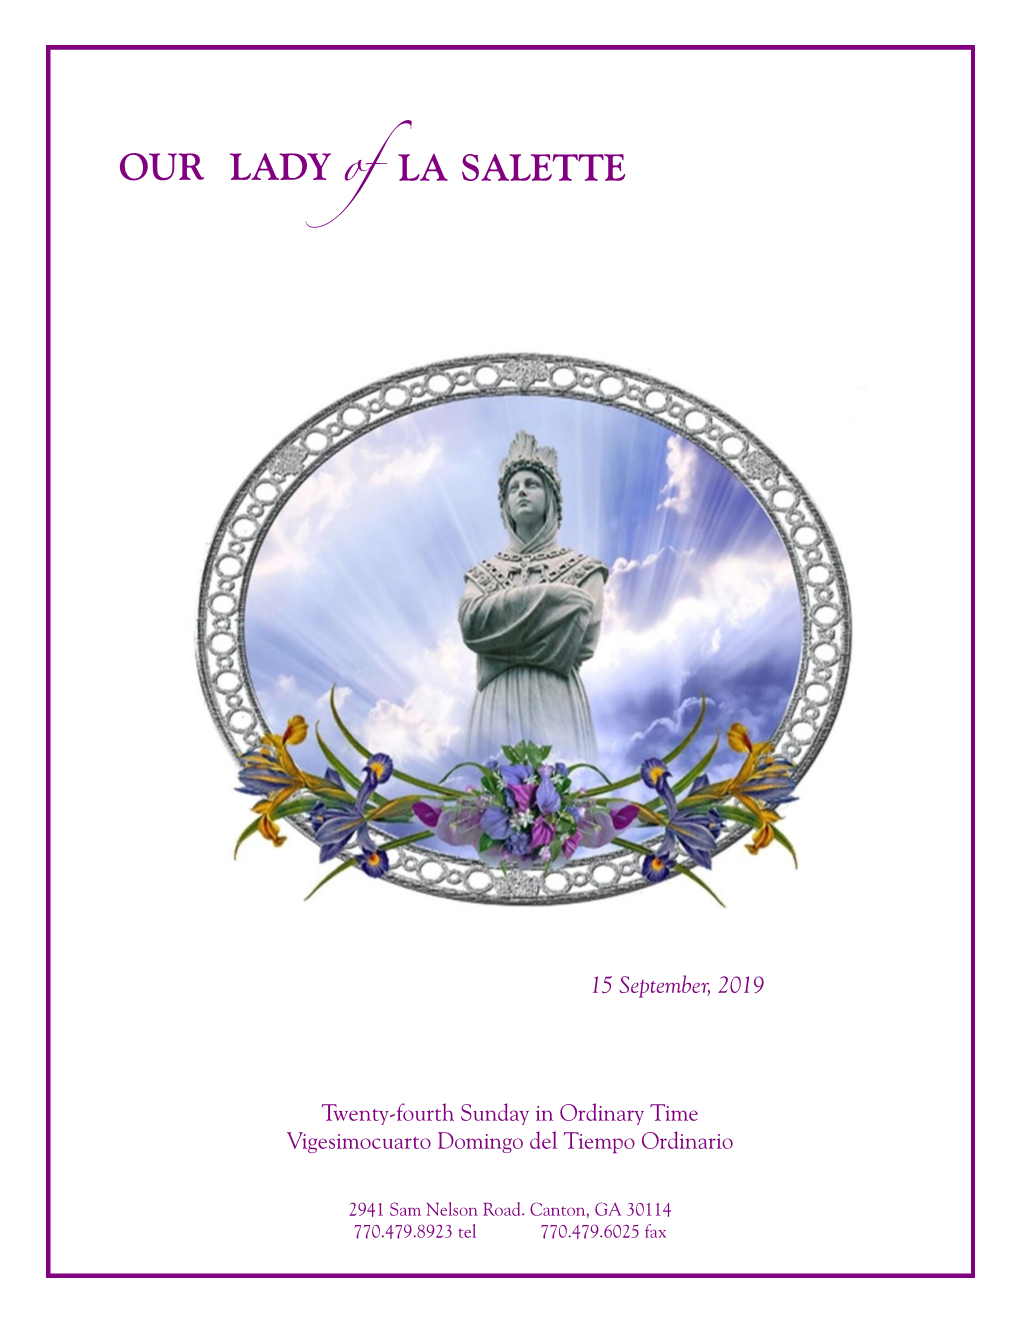 Our Lady of La Salette Catholic Church